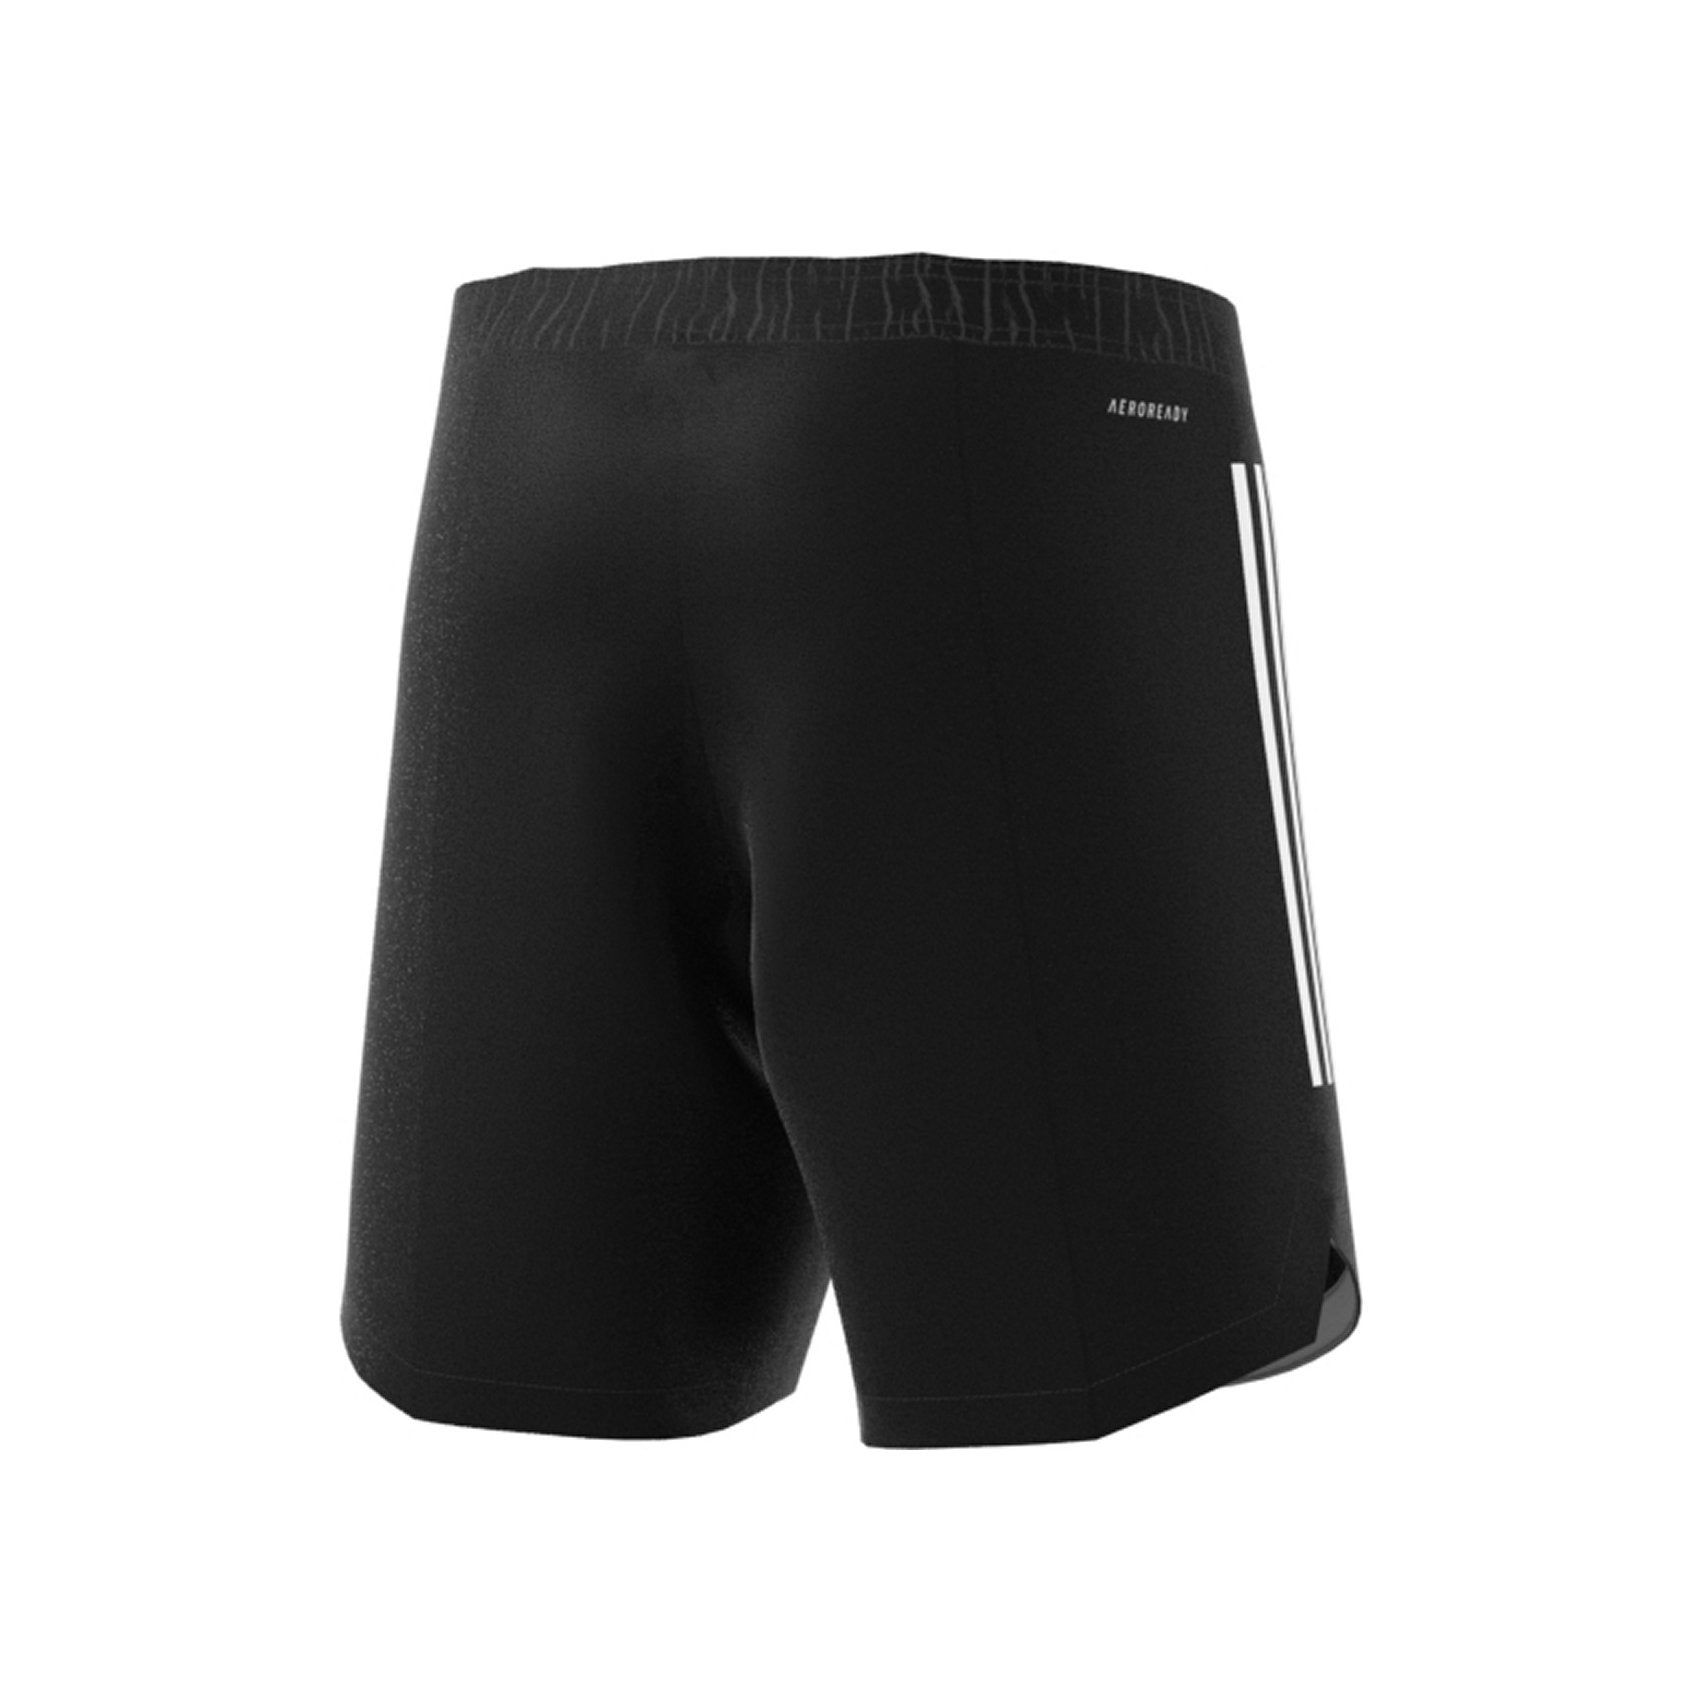 Adidas Men's Condivo 20 Short - Black / White